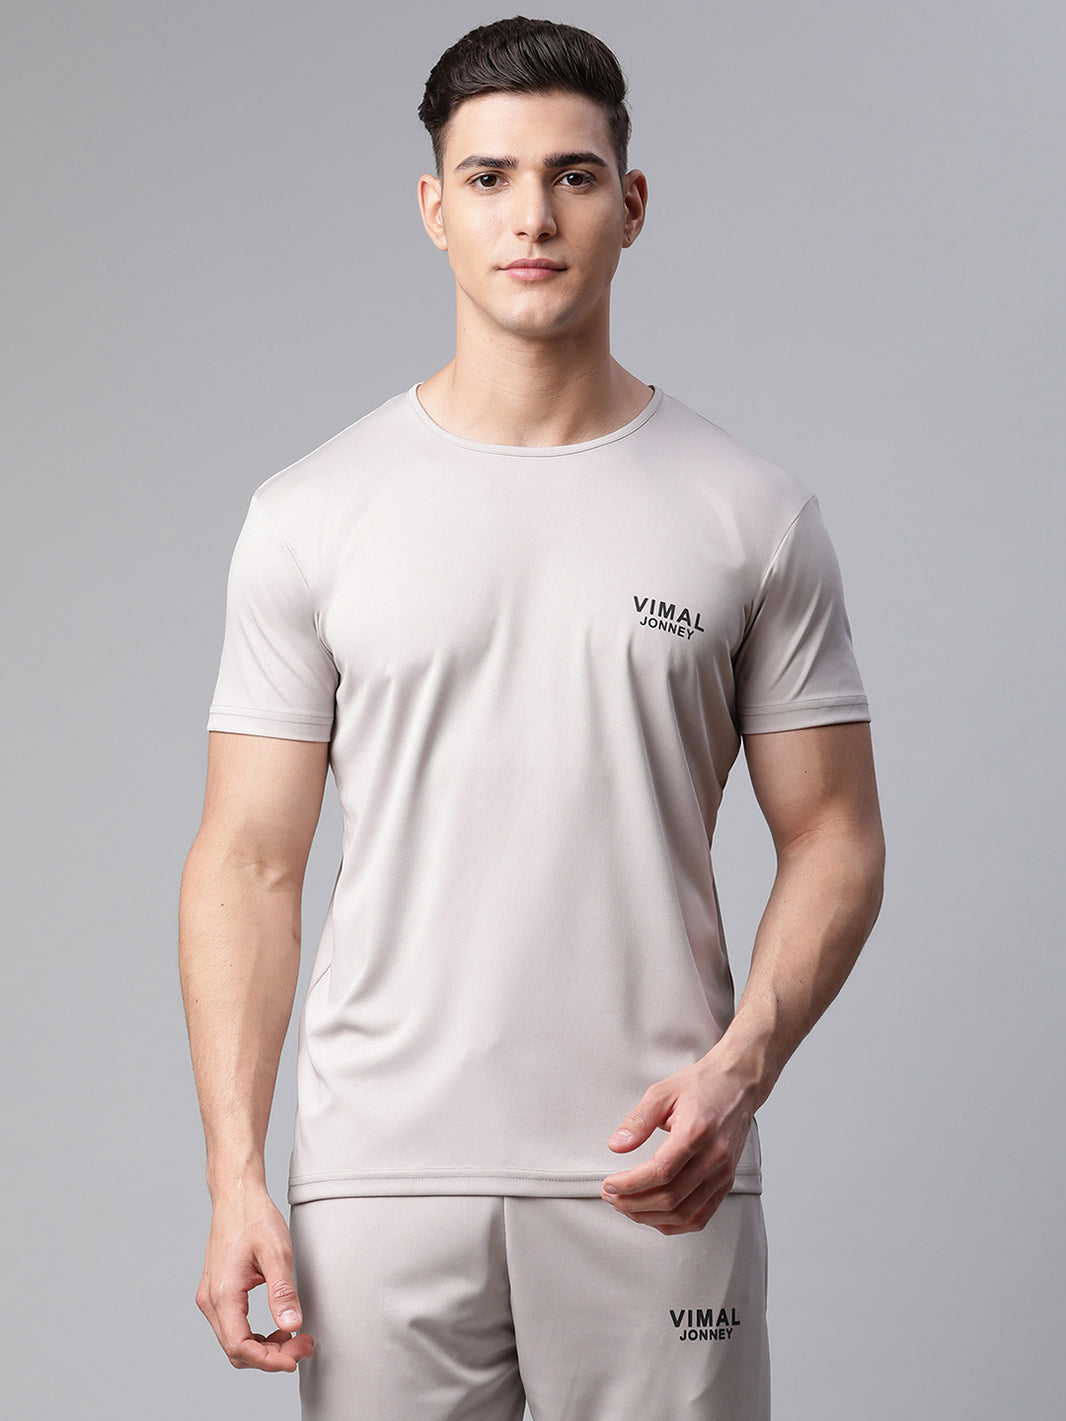 Vimal Jonney Dryfit Solid Light Grey T-shirt for Men